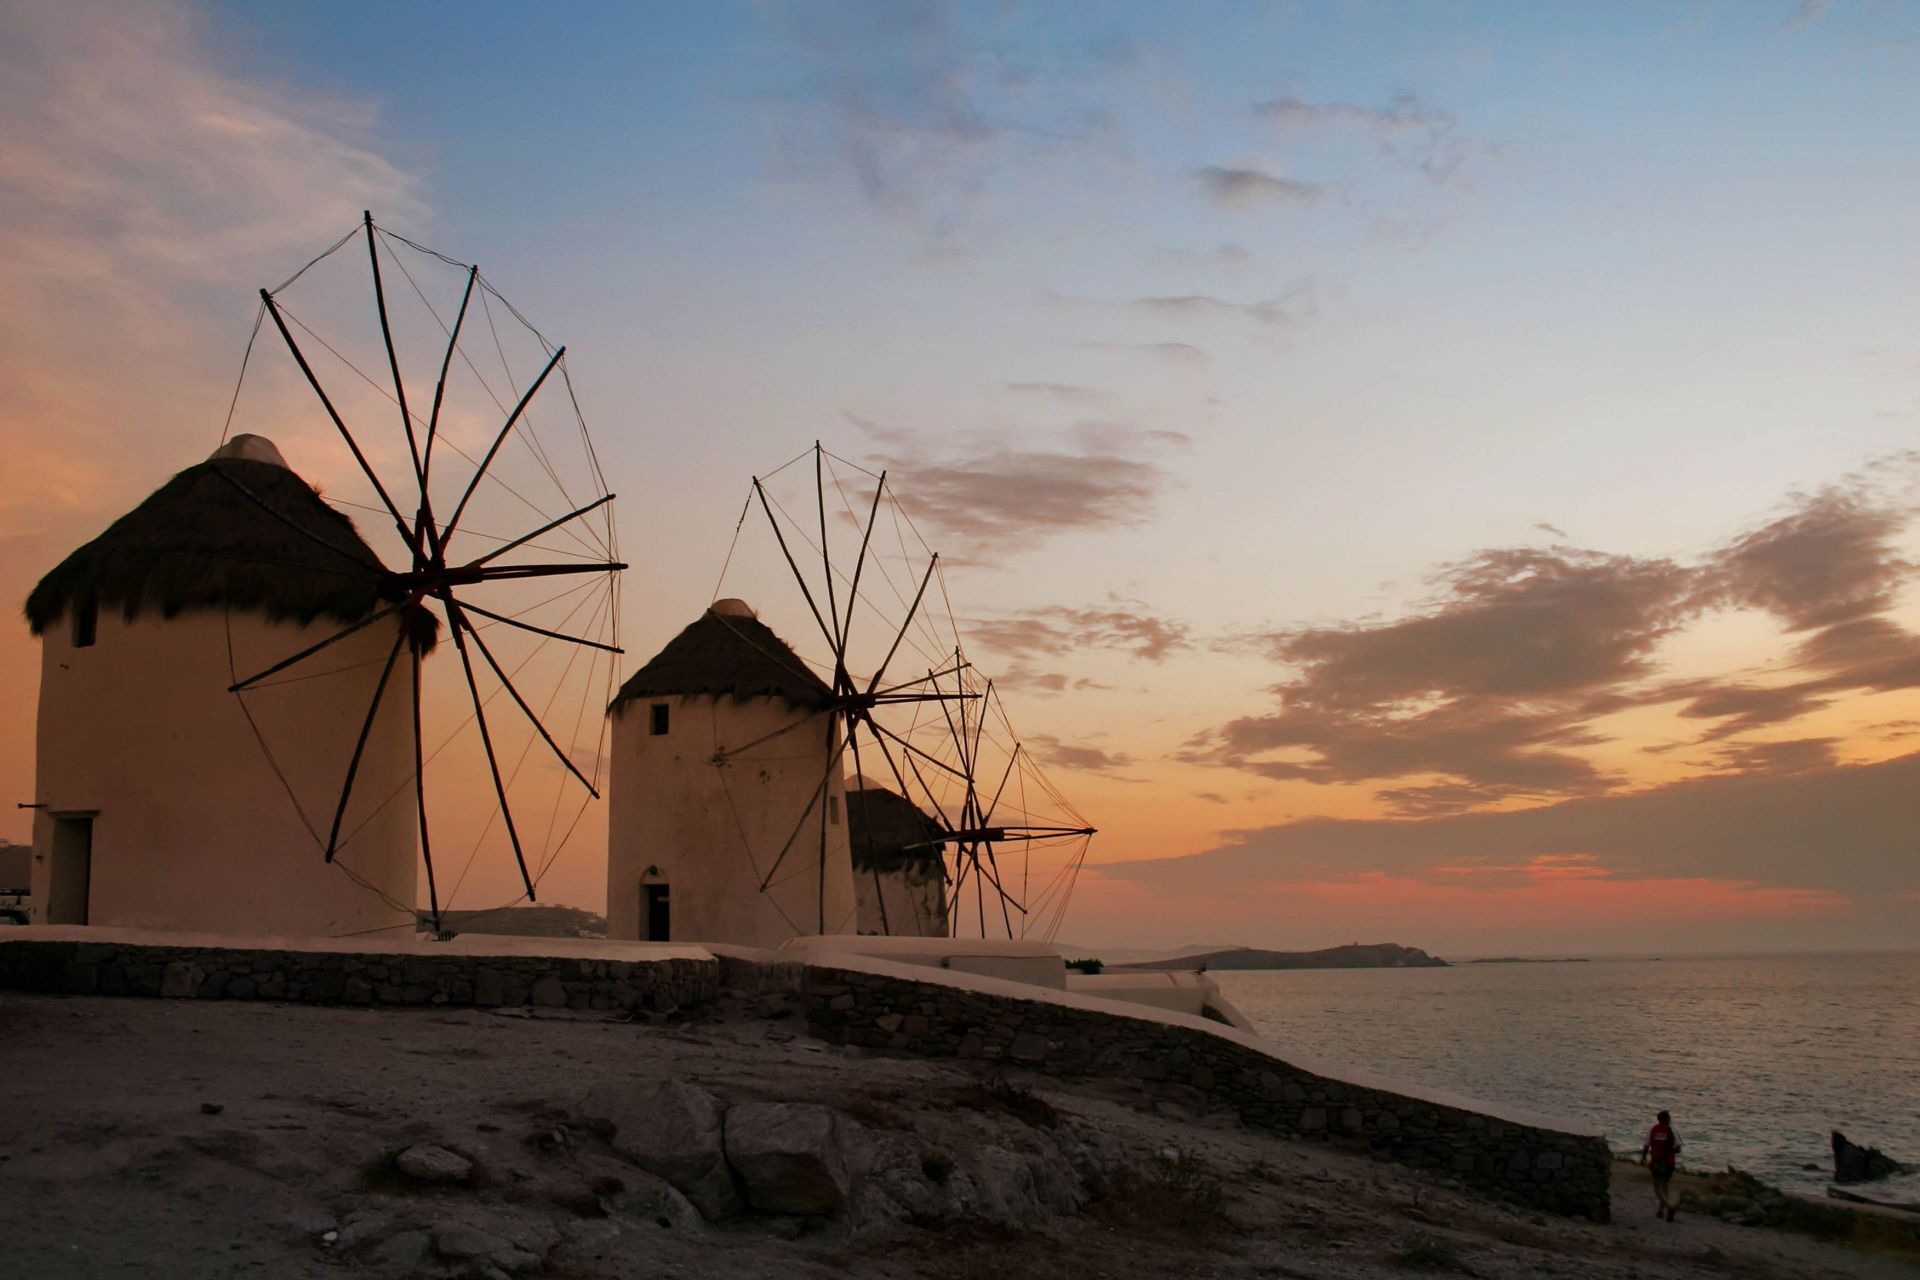 Windmills, the landmark of the island